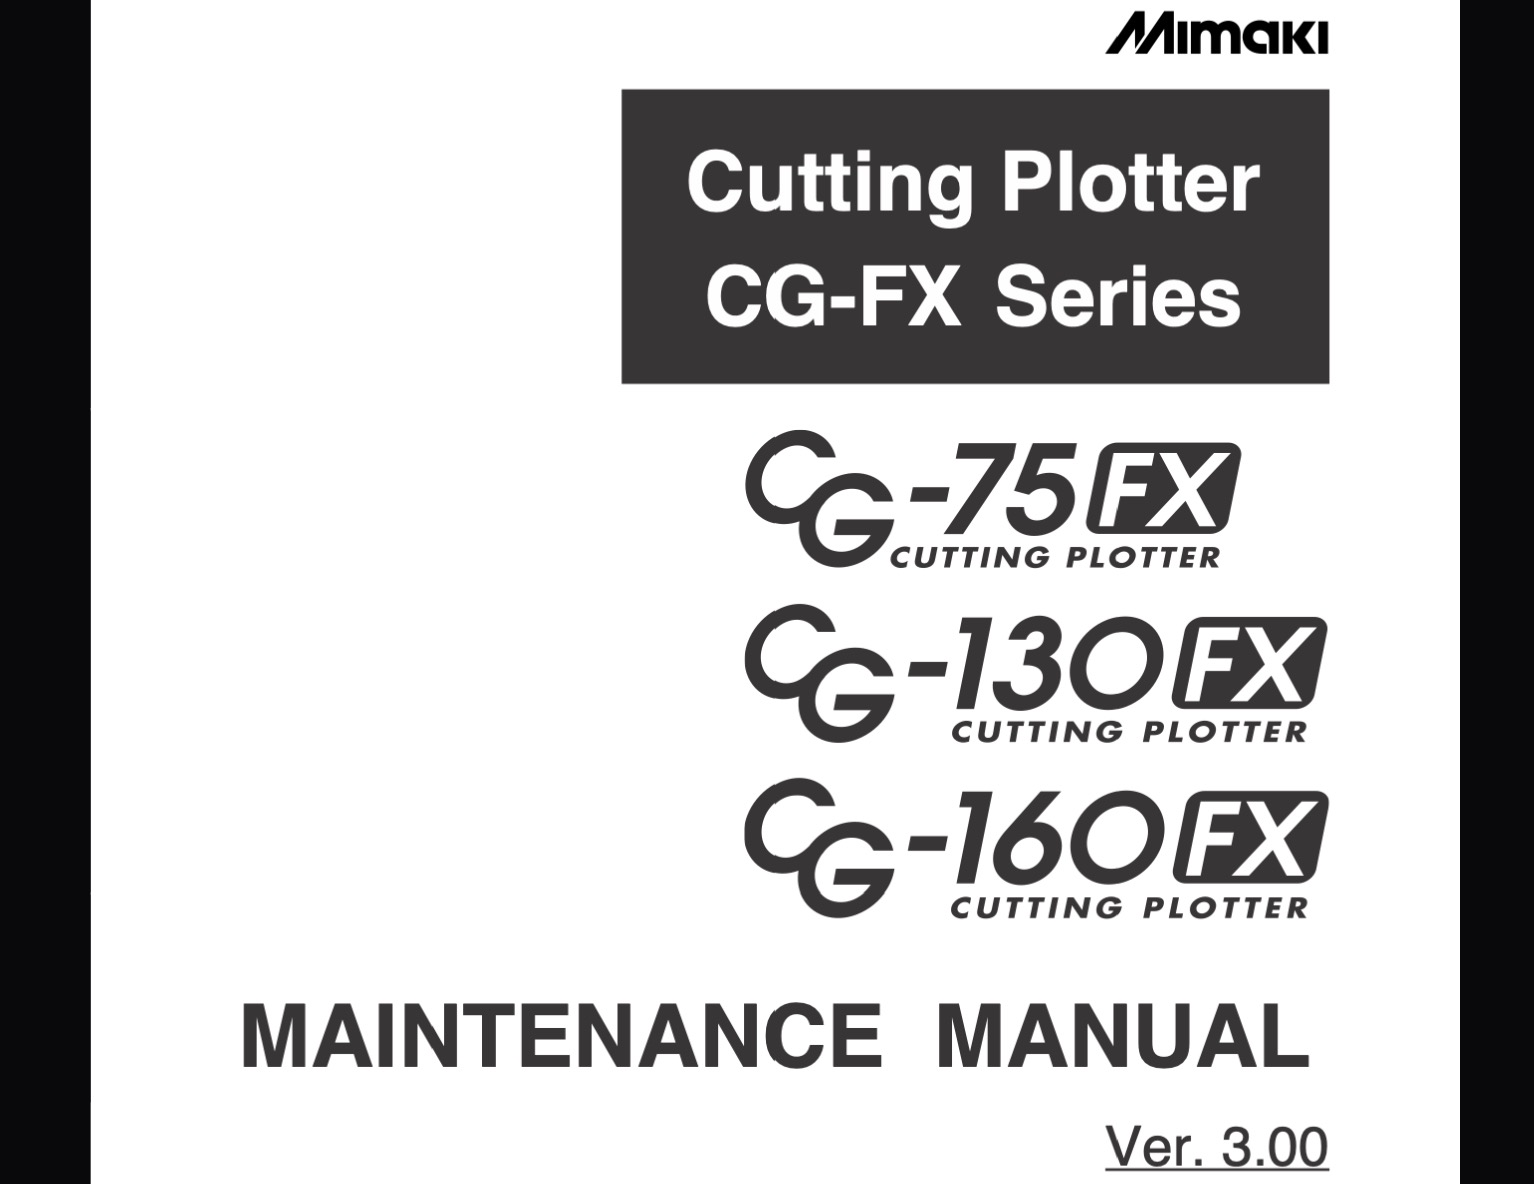 Mimaki CG-75FX, CG-130FX, CG-160FX Cutting Plotters Maintenance Manual